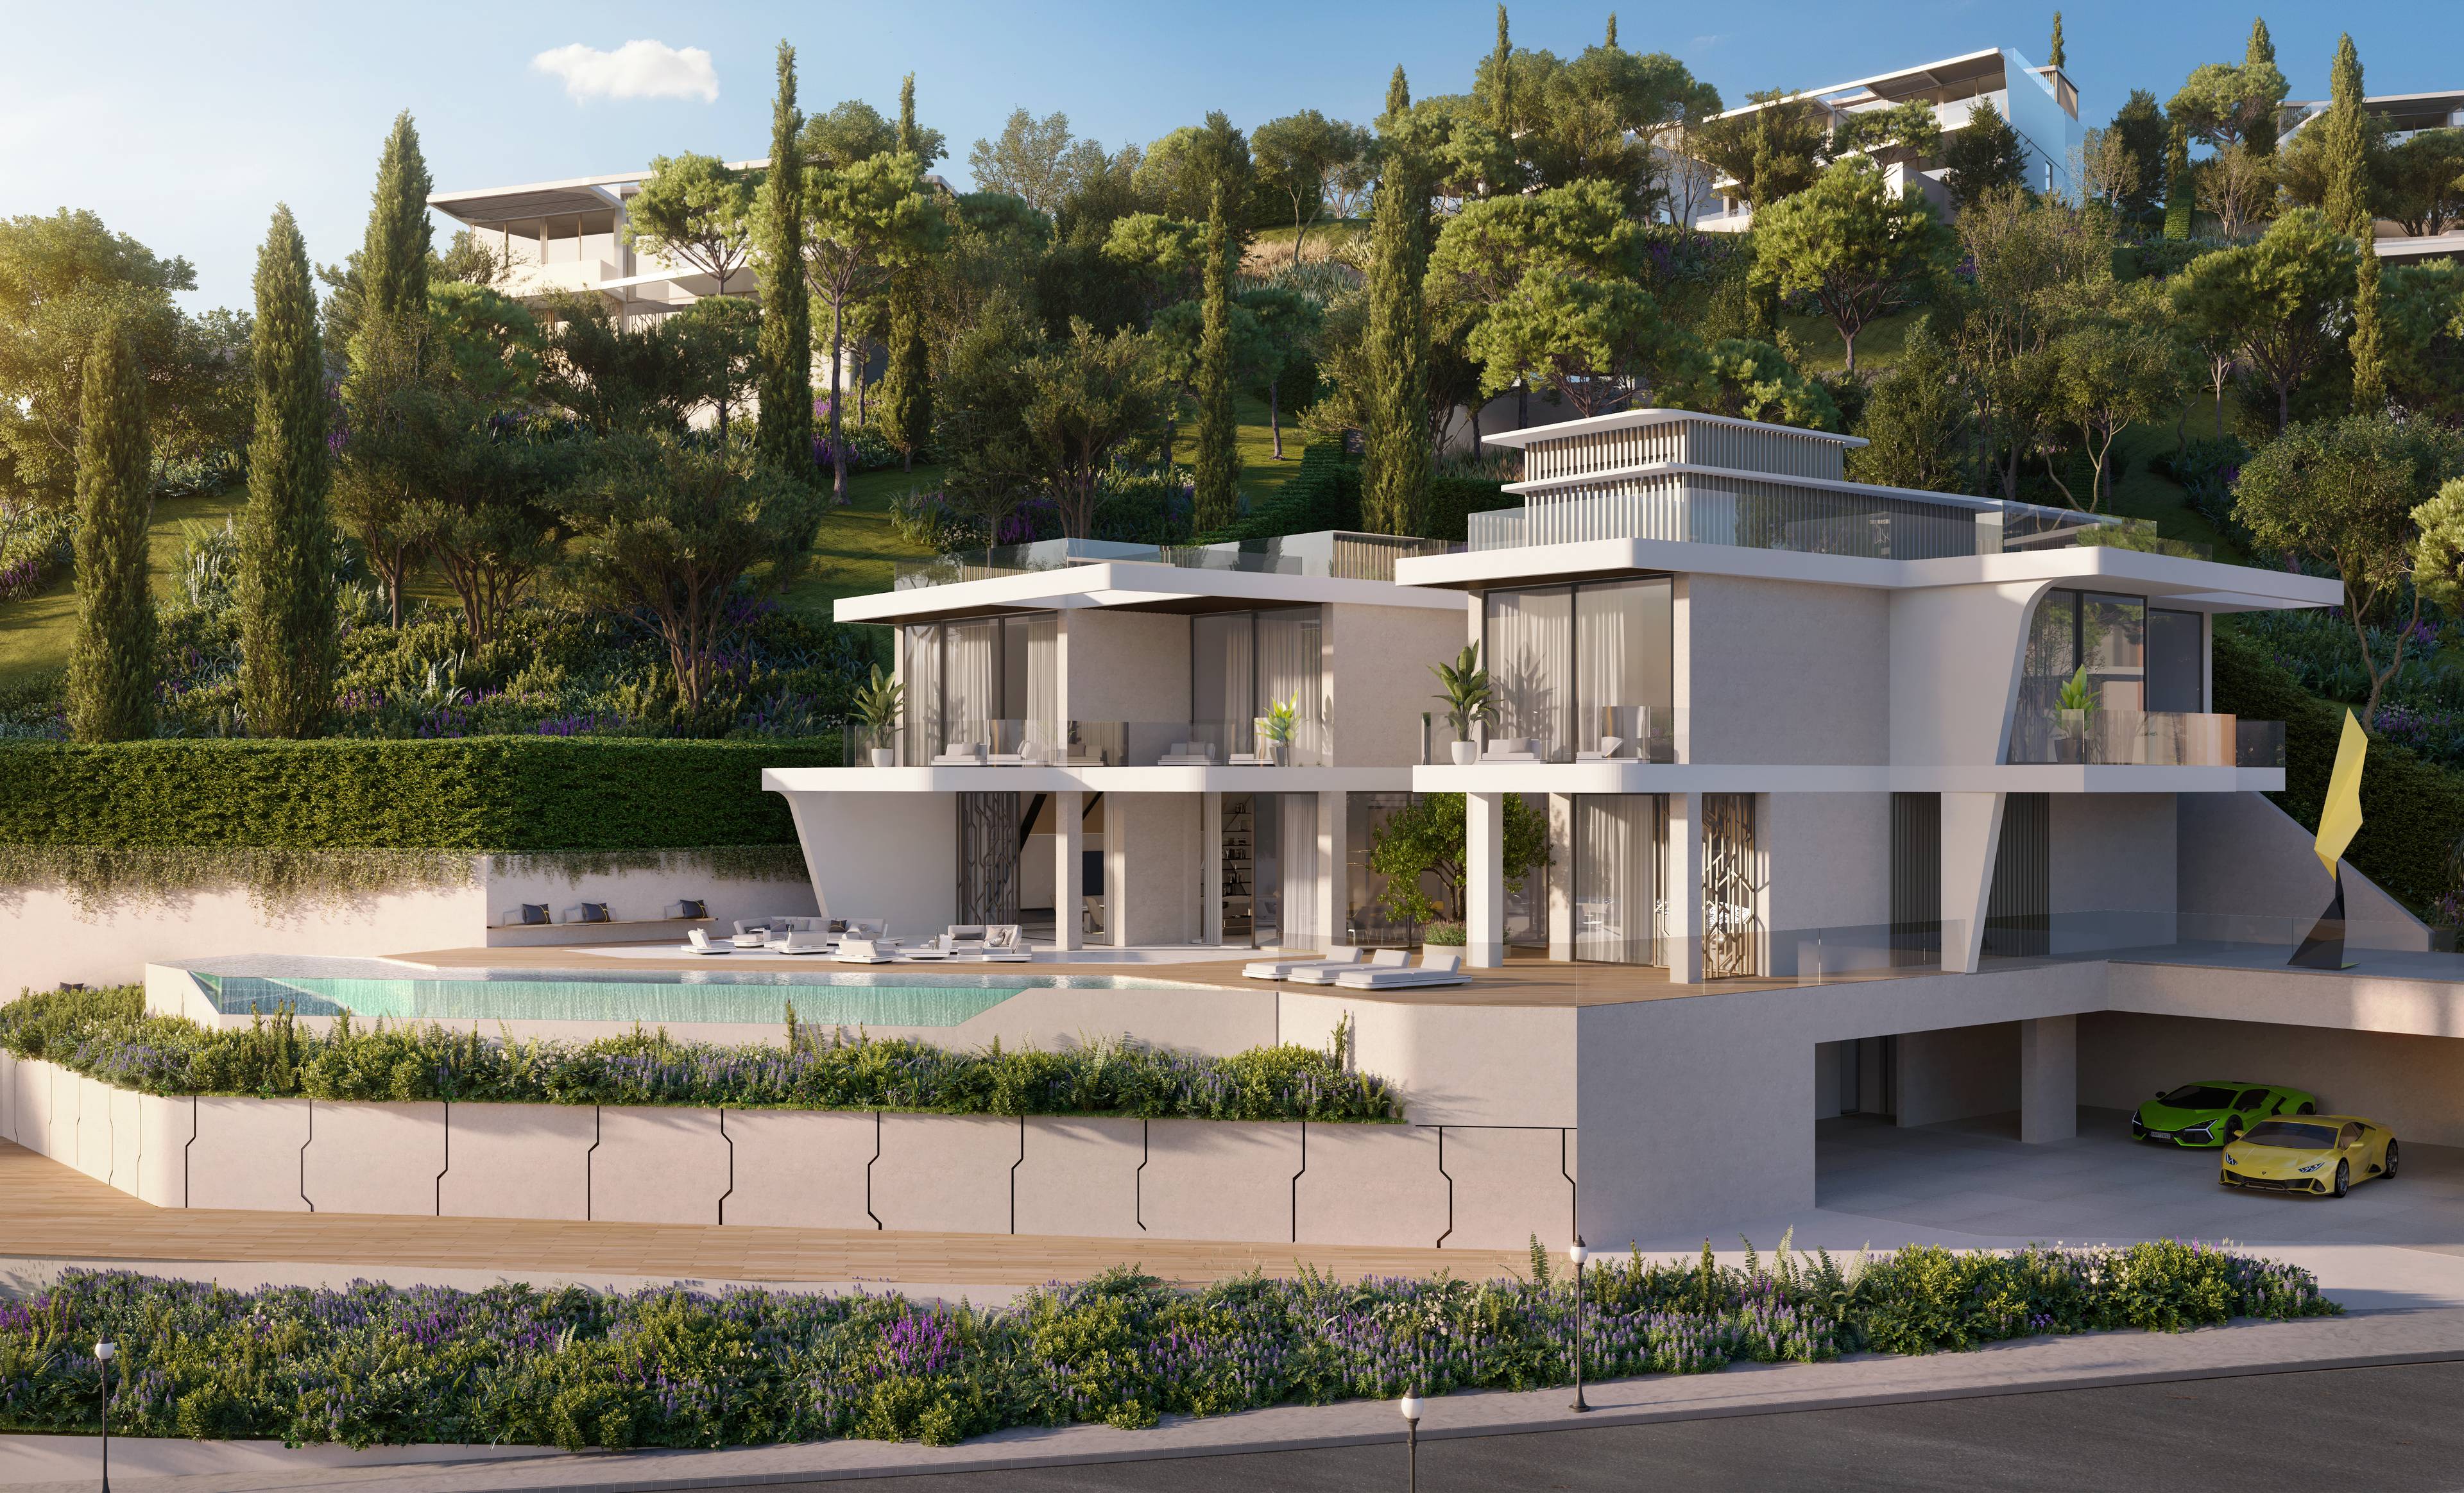 6 Bedroom Villa For Sale in the heart of Benahavís - Tierra Viva: Design Inspired by Automobili Lamborghini